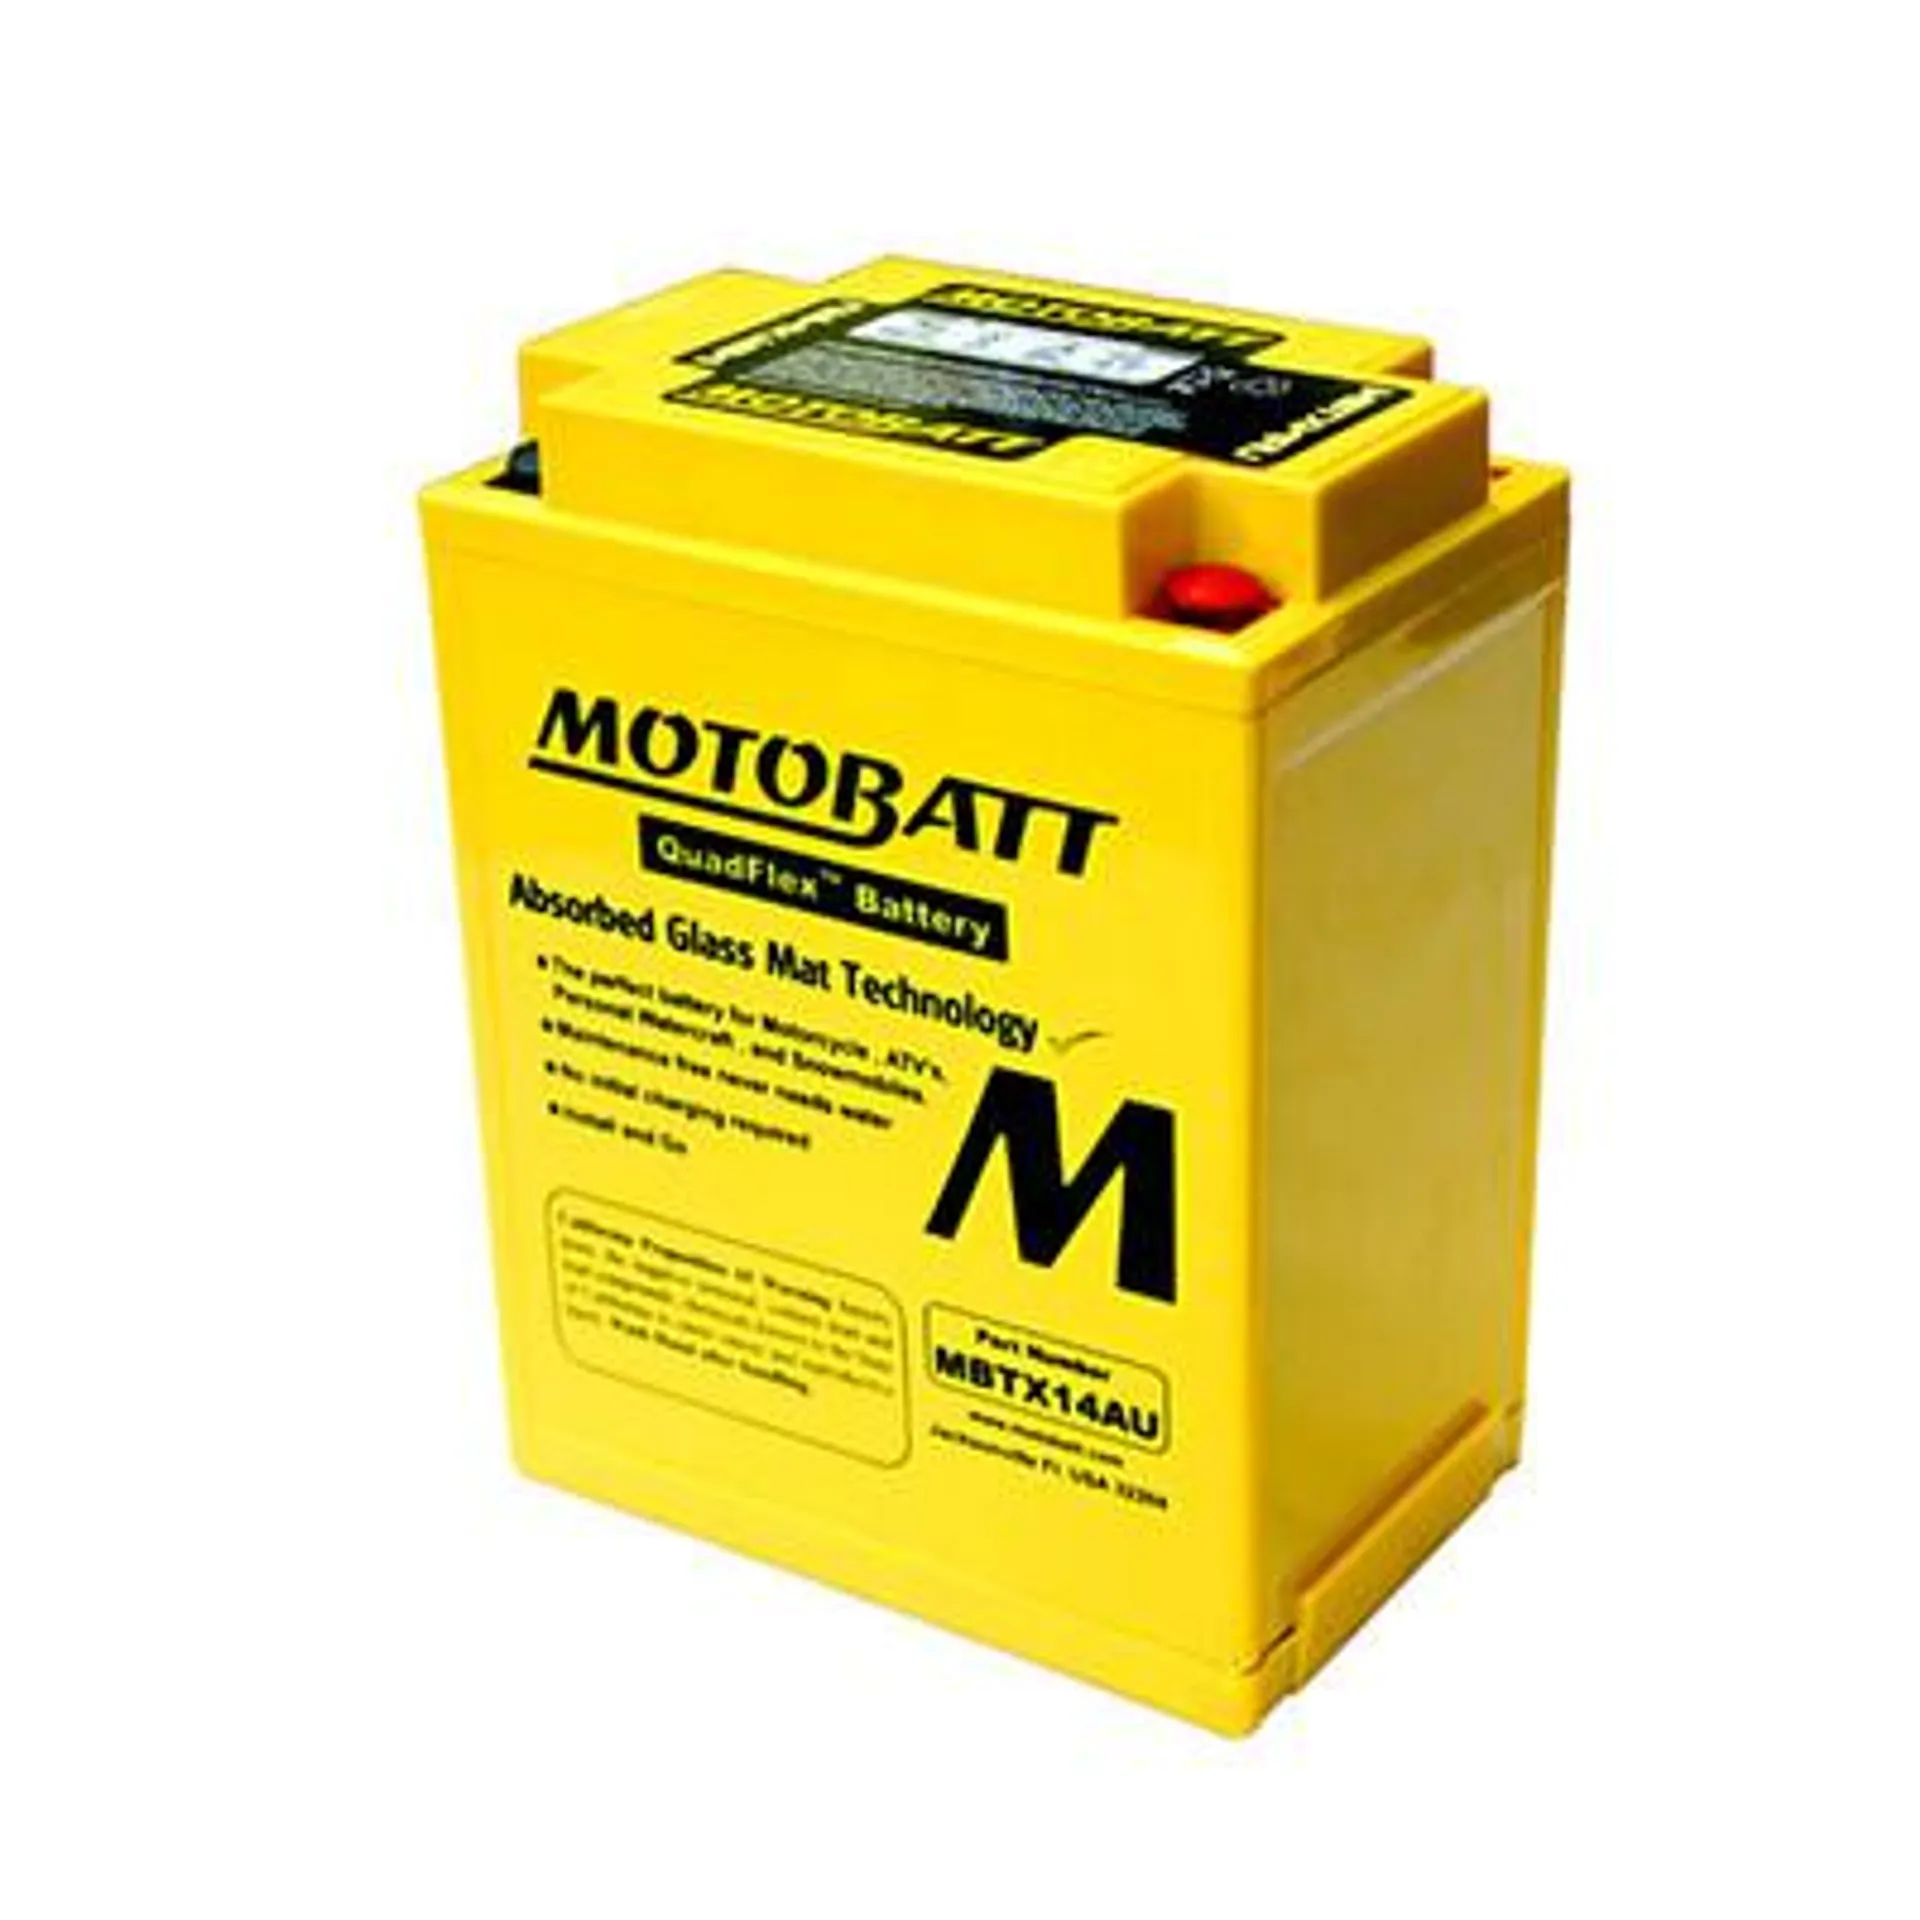 MBTX14AU 12V Motobatt Battery